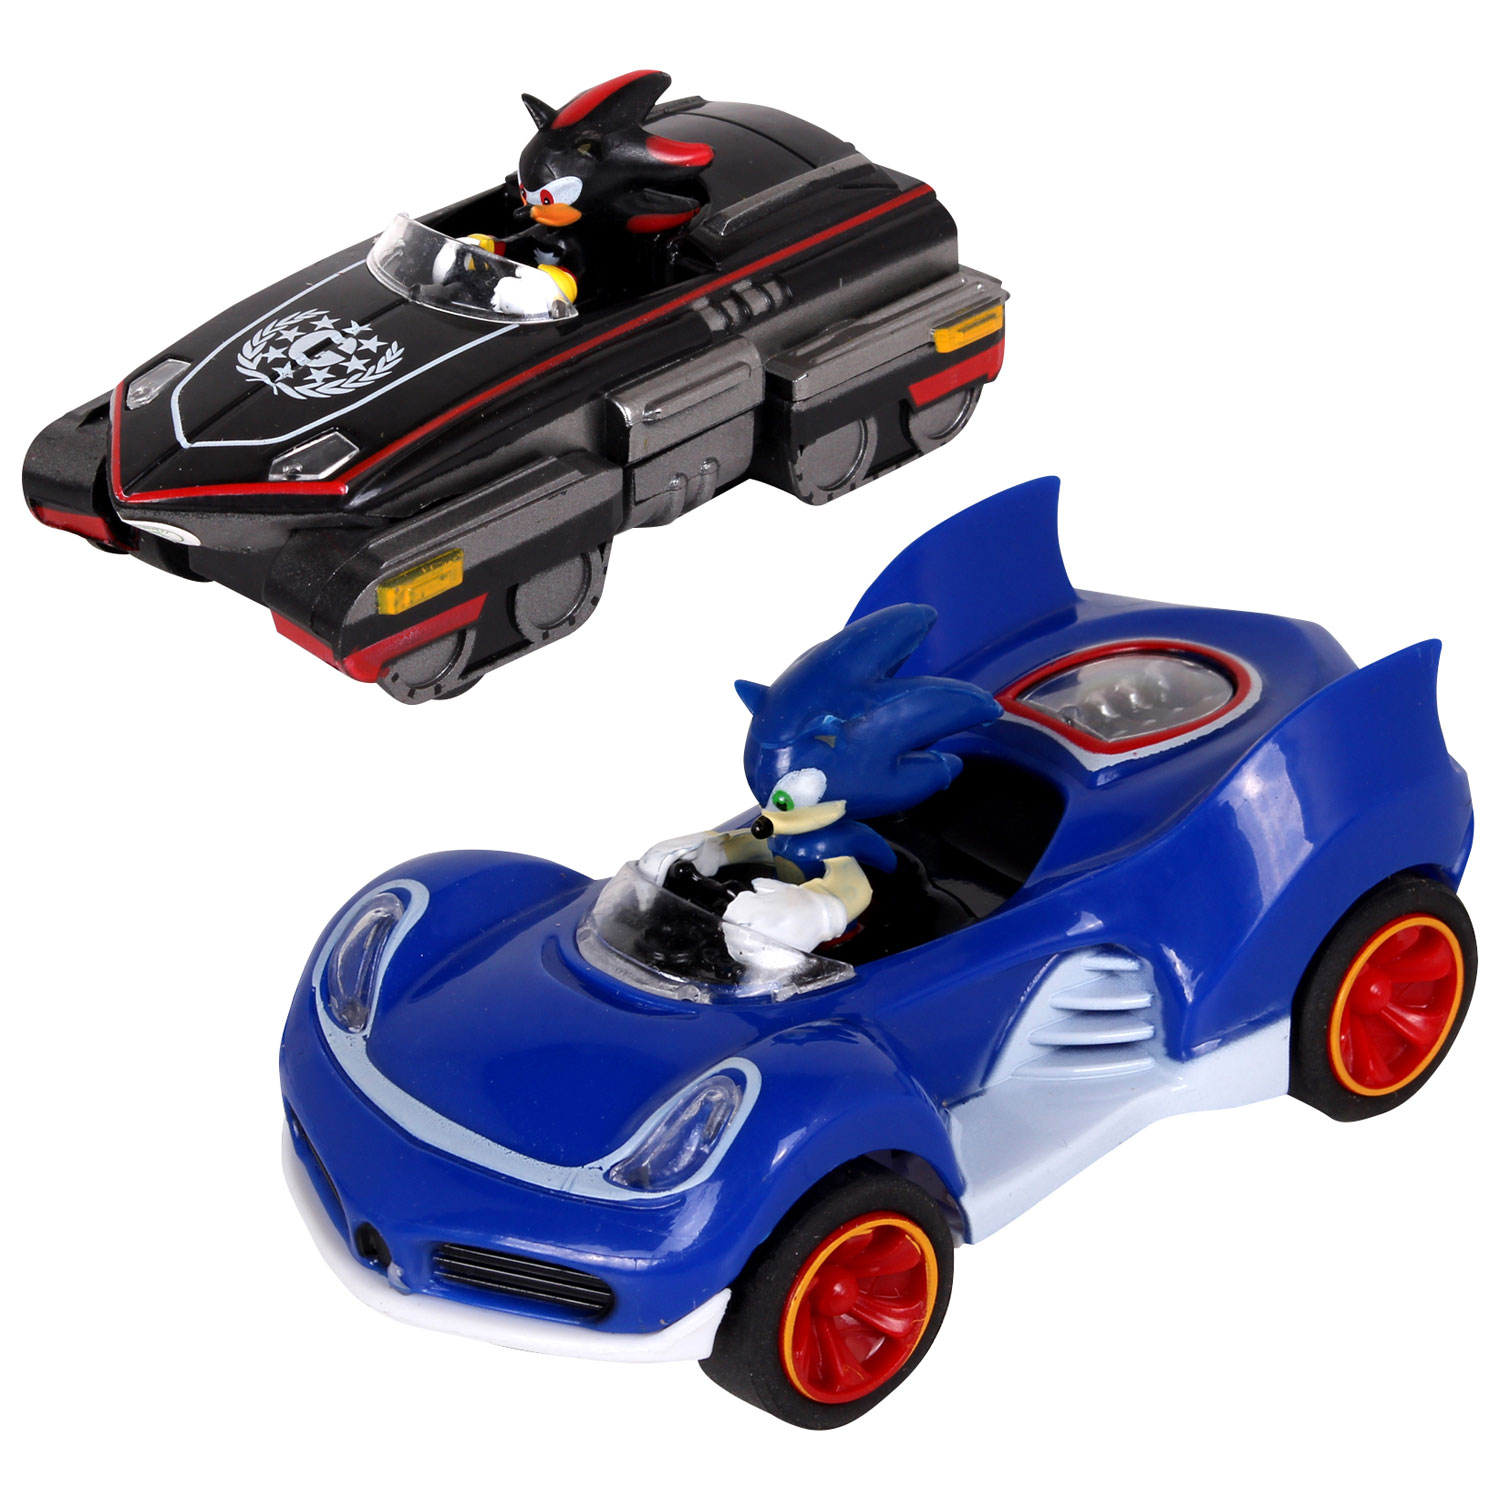 NKOK SART Sonic & Shadow Slot RC Car Race Set (622) - Black